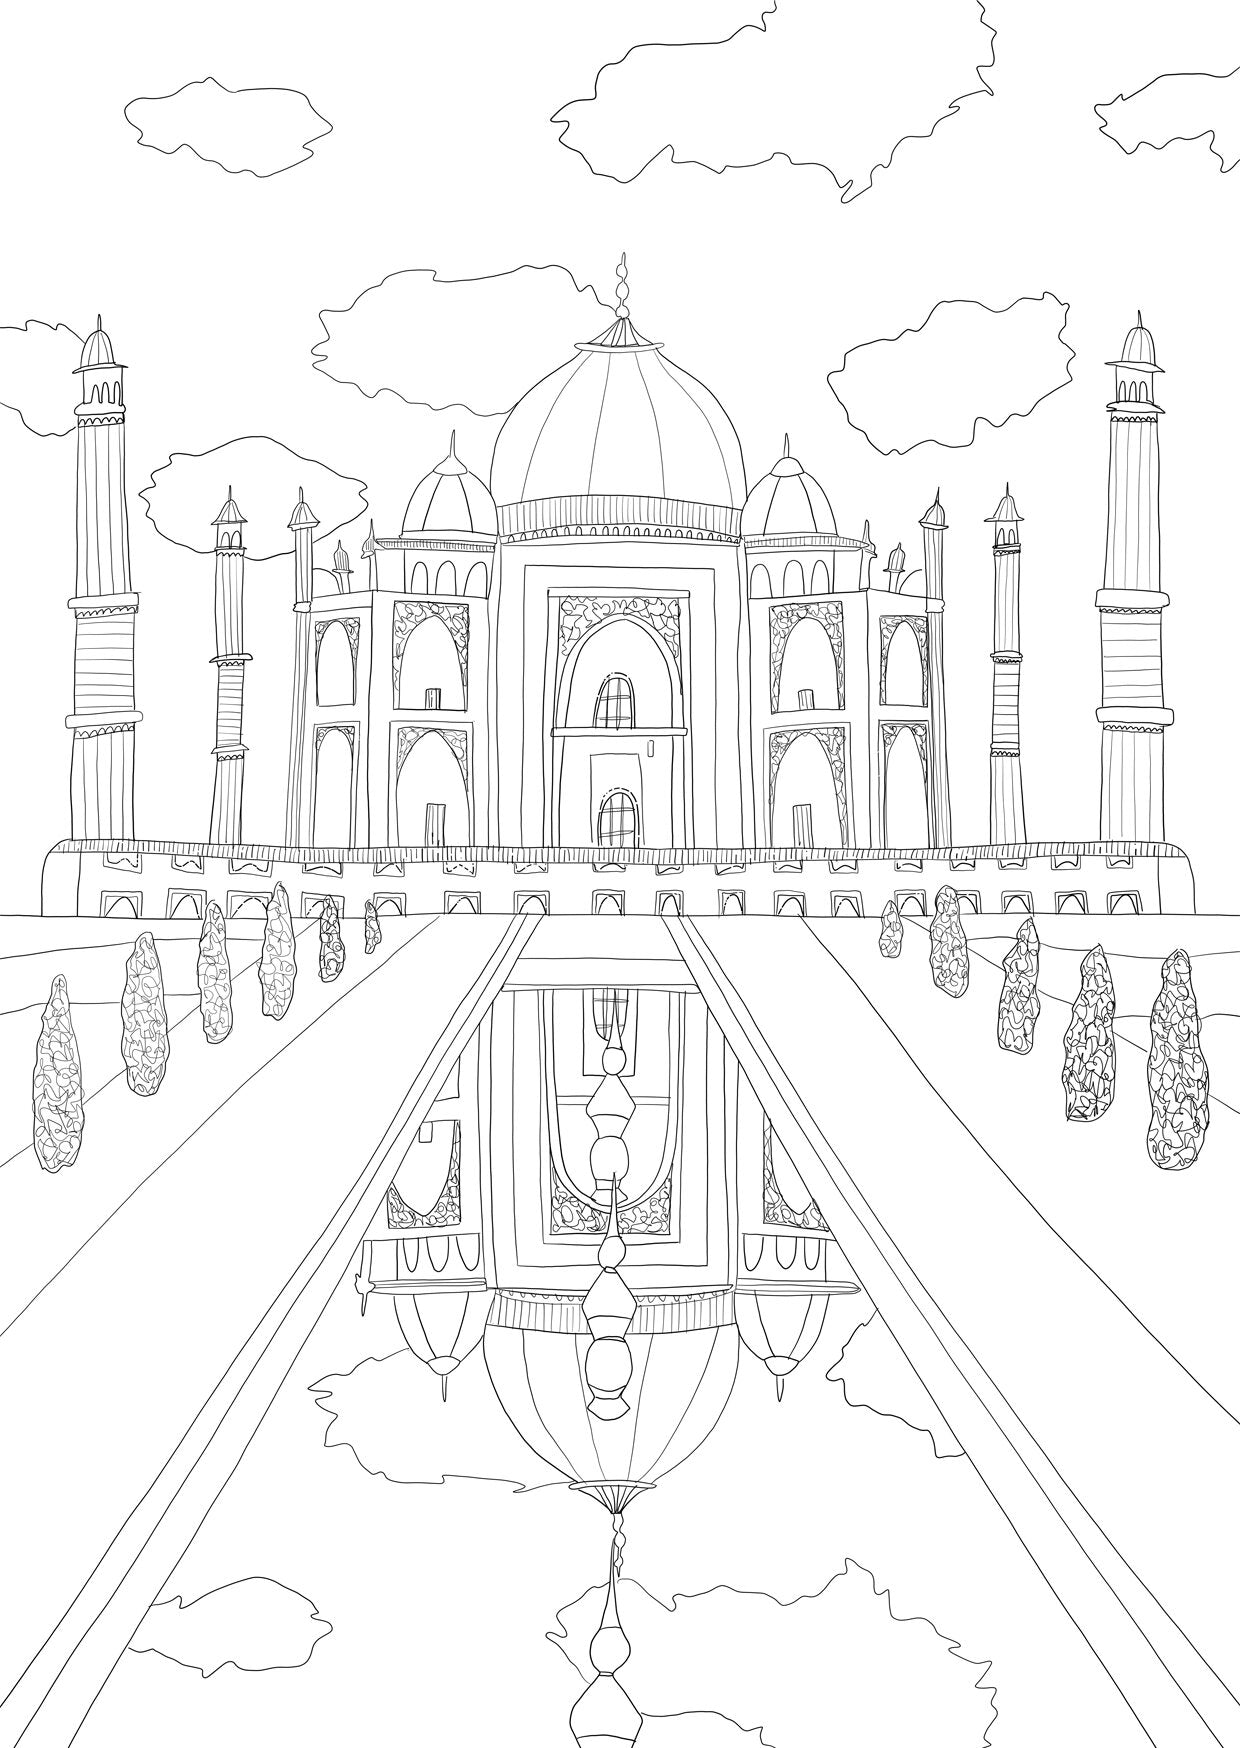 Taj Mahal-drawing by Argussov on DeviantArt